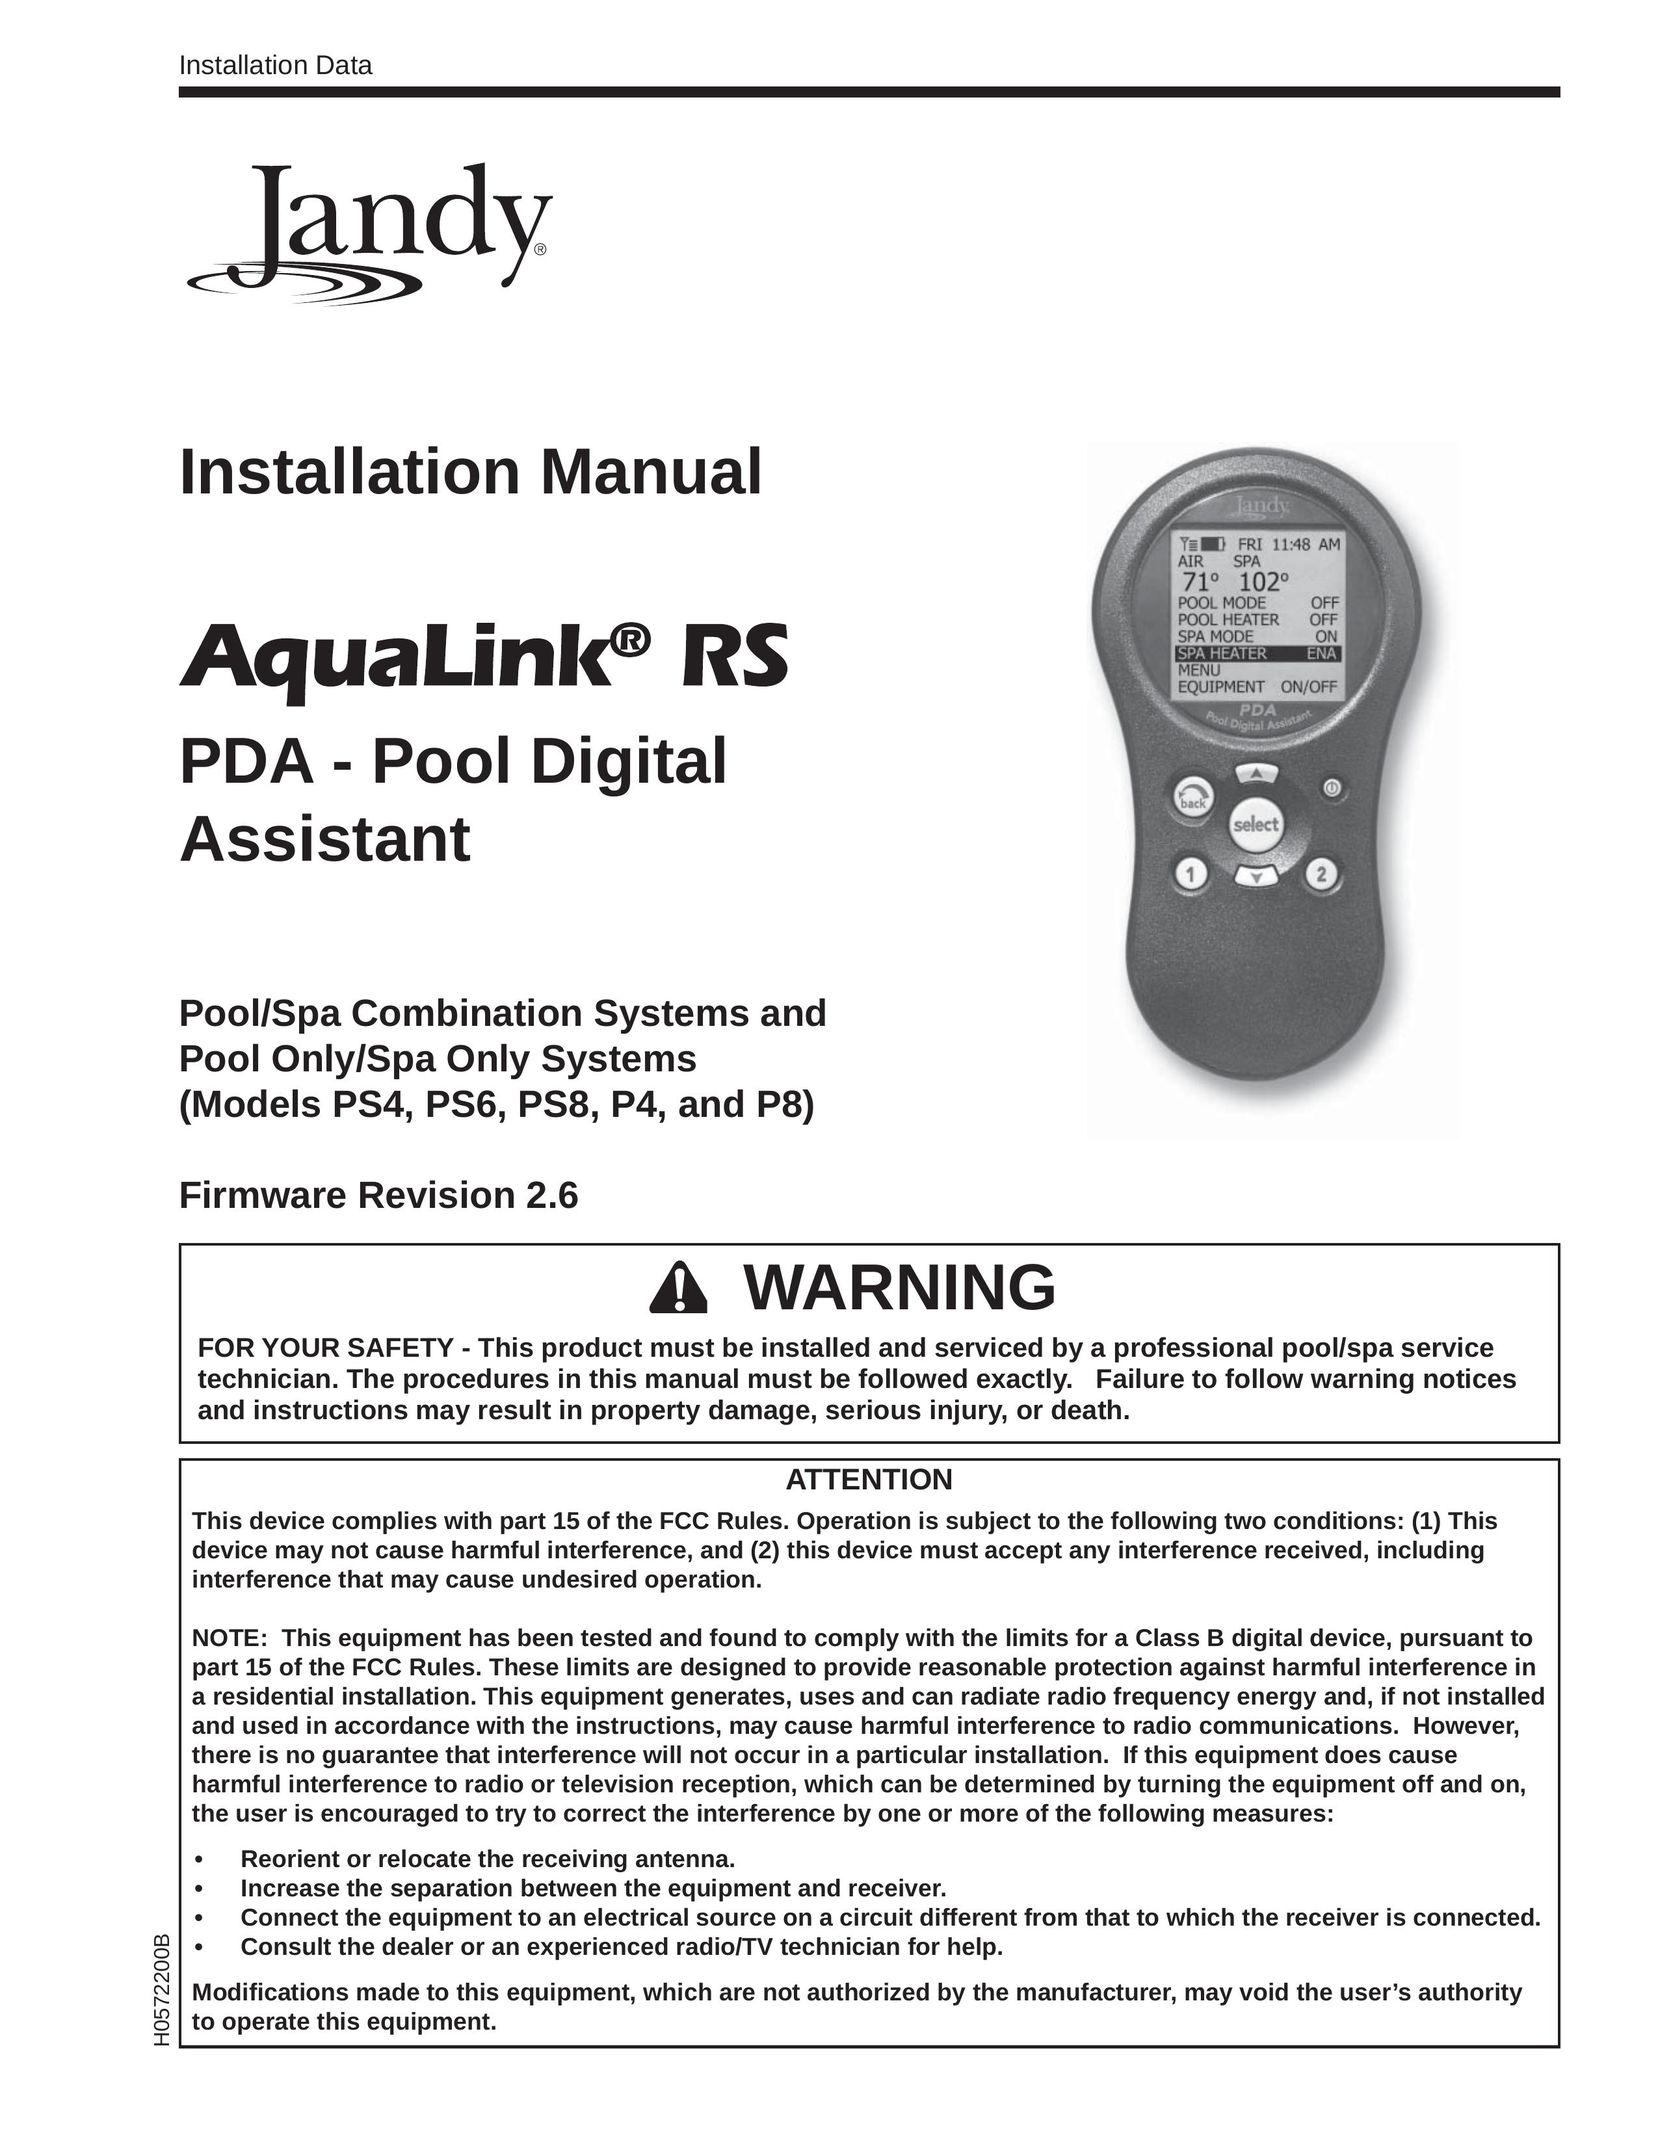 Pentair and P8 PDAs & Smartphones User Manual